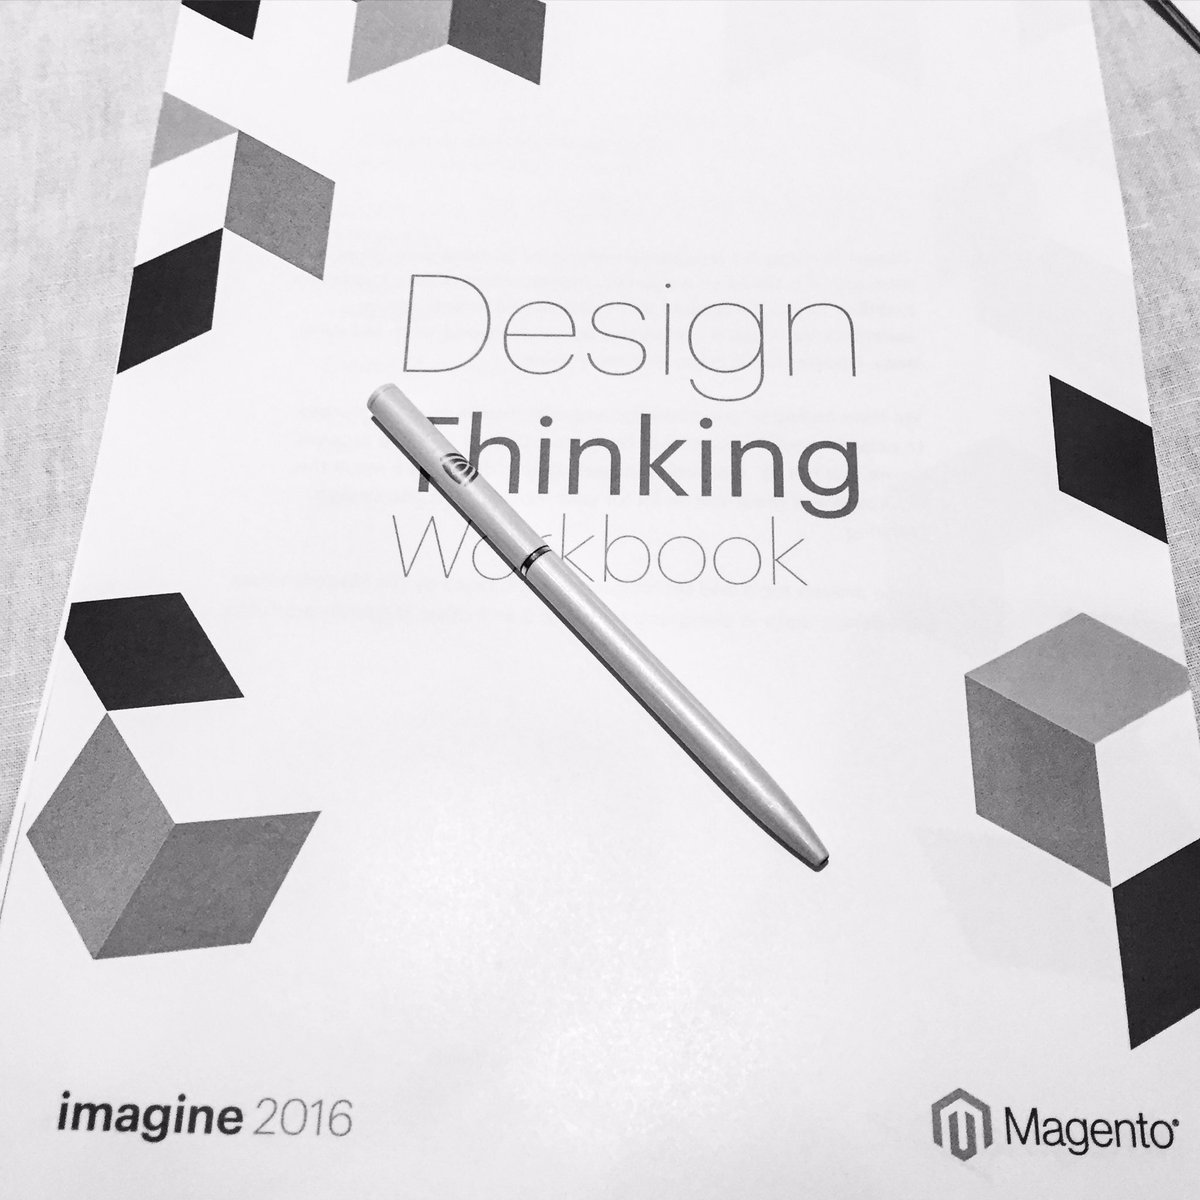 tonygarc1a: really enjoying the design thinking workshop #Imagine2016 #MagentoImagine https://t.co/X9eYRDYX0d